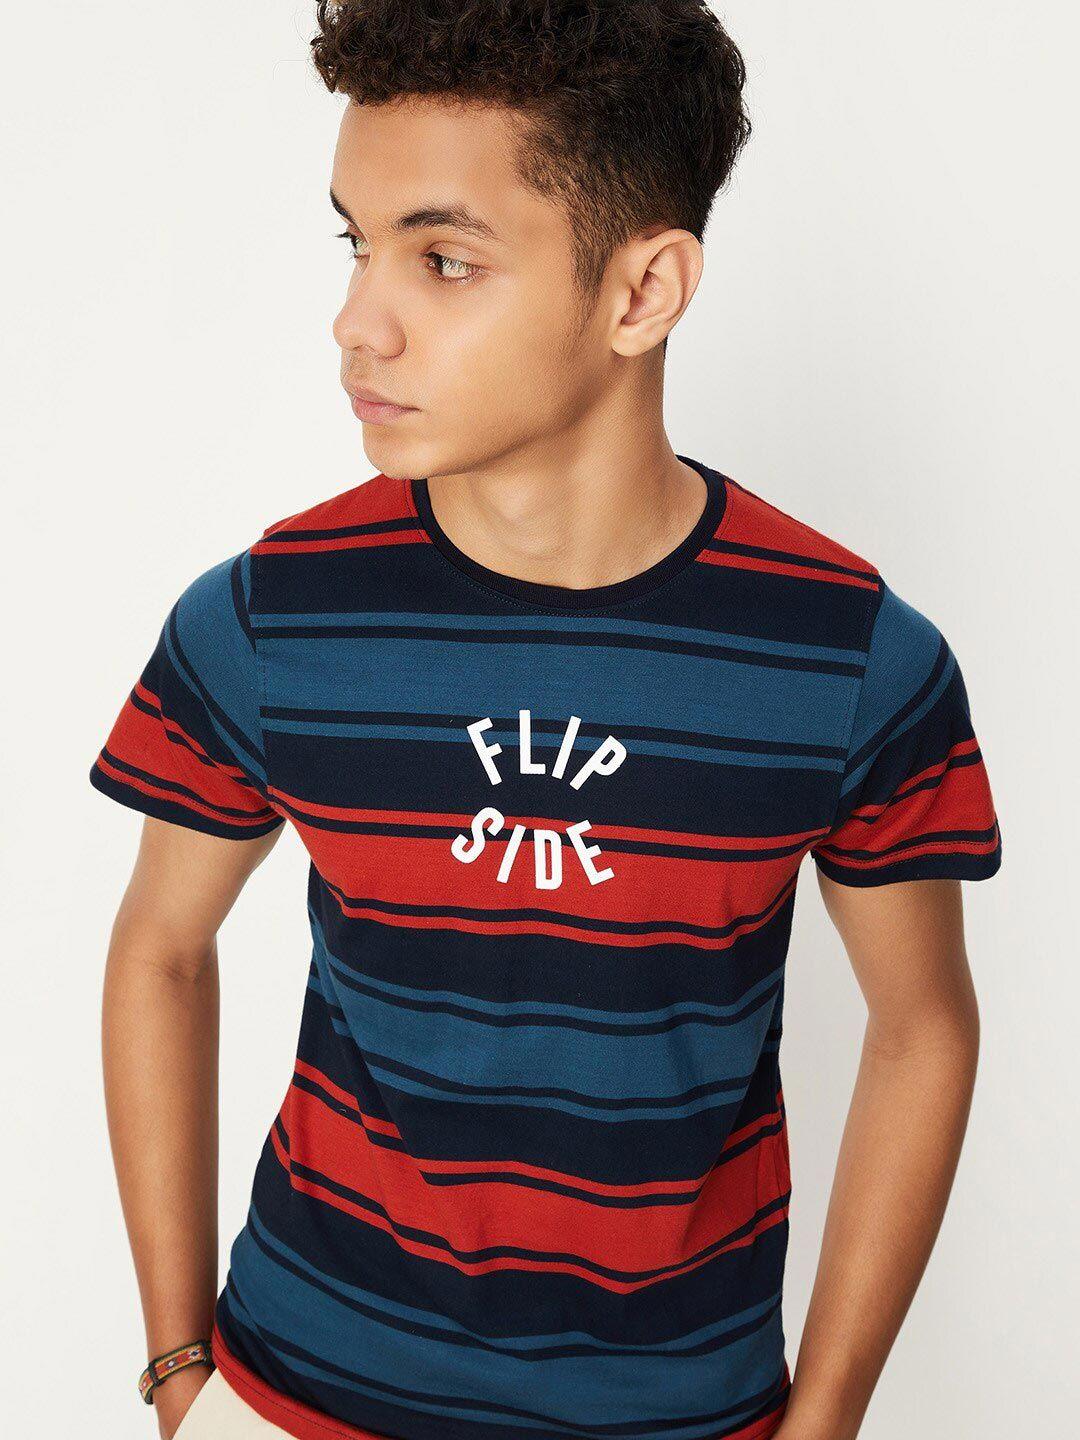 max boys striped pure cotton t-shirt